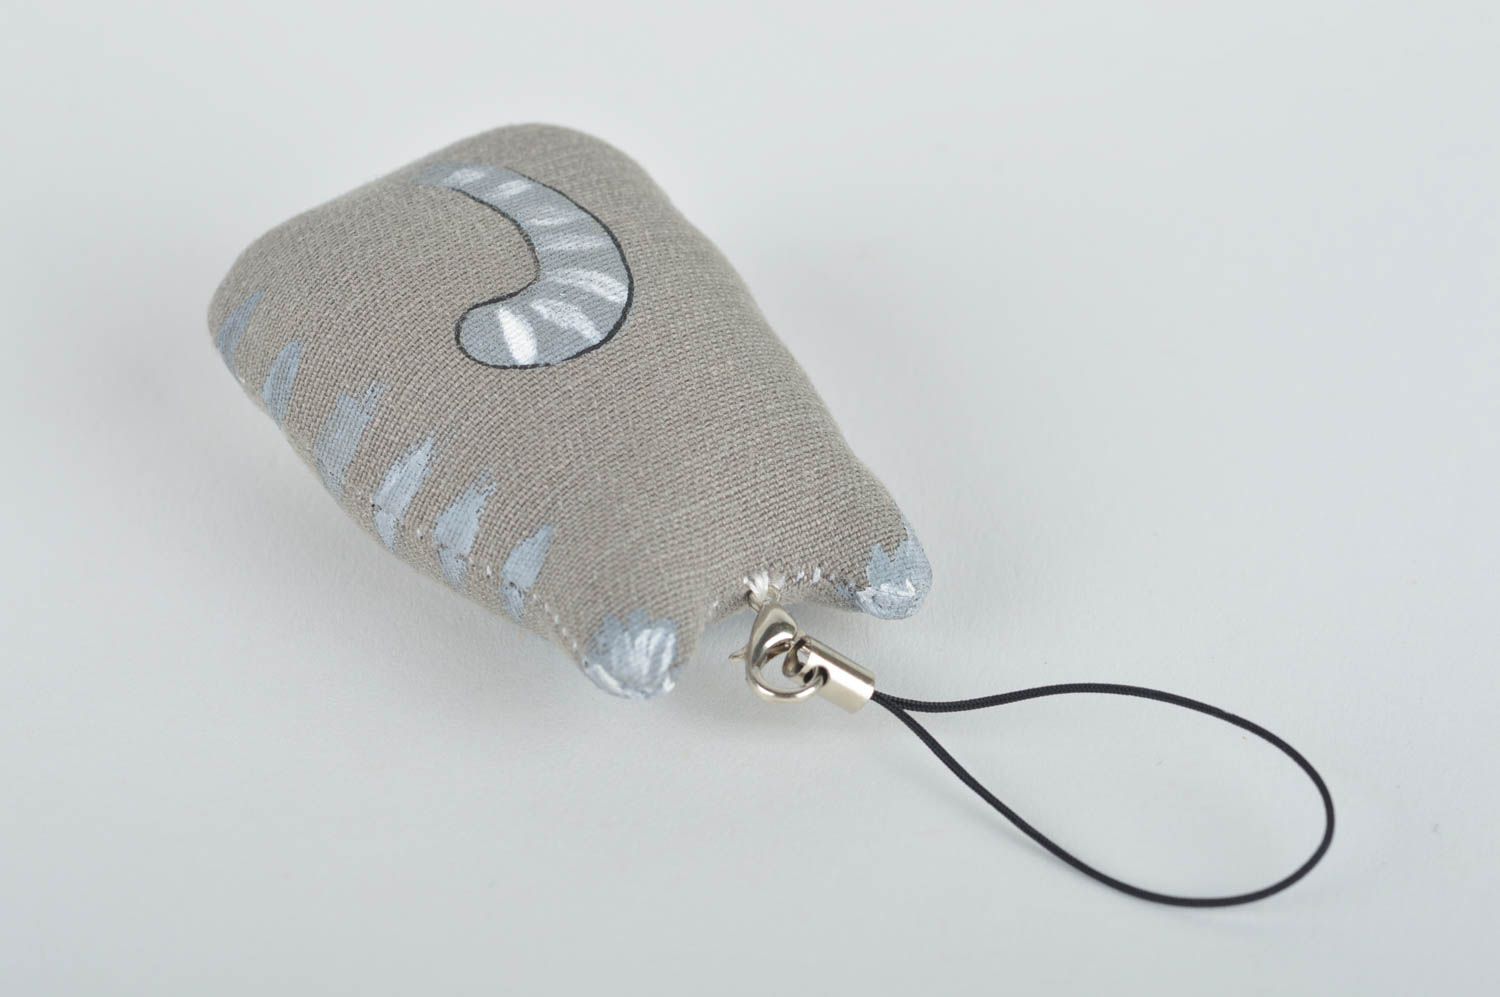 Popular handmade soft keychain stuffed soft toy fabric phone charm gift ideas photo 5